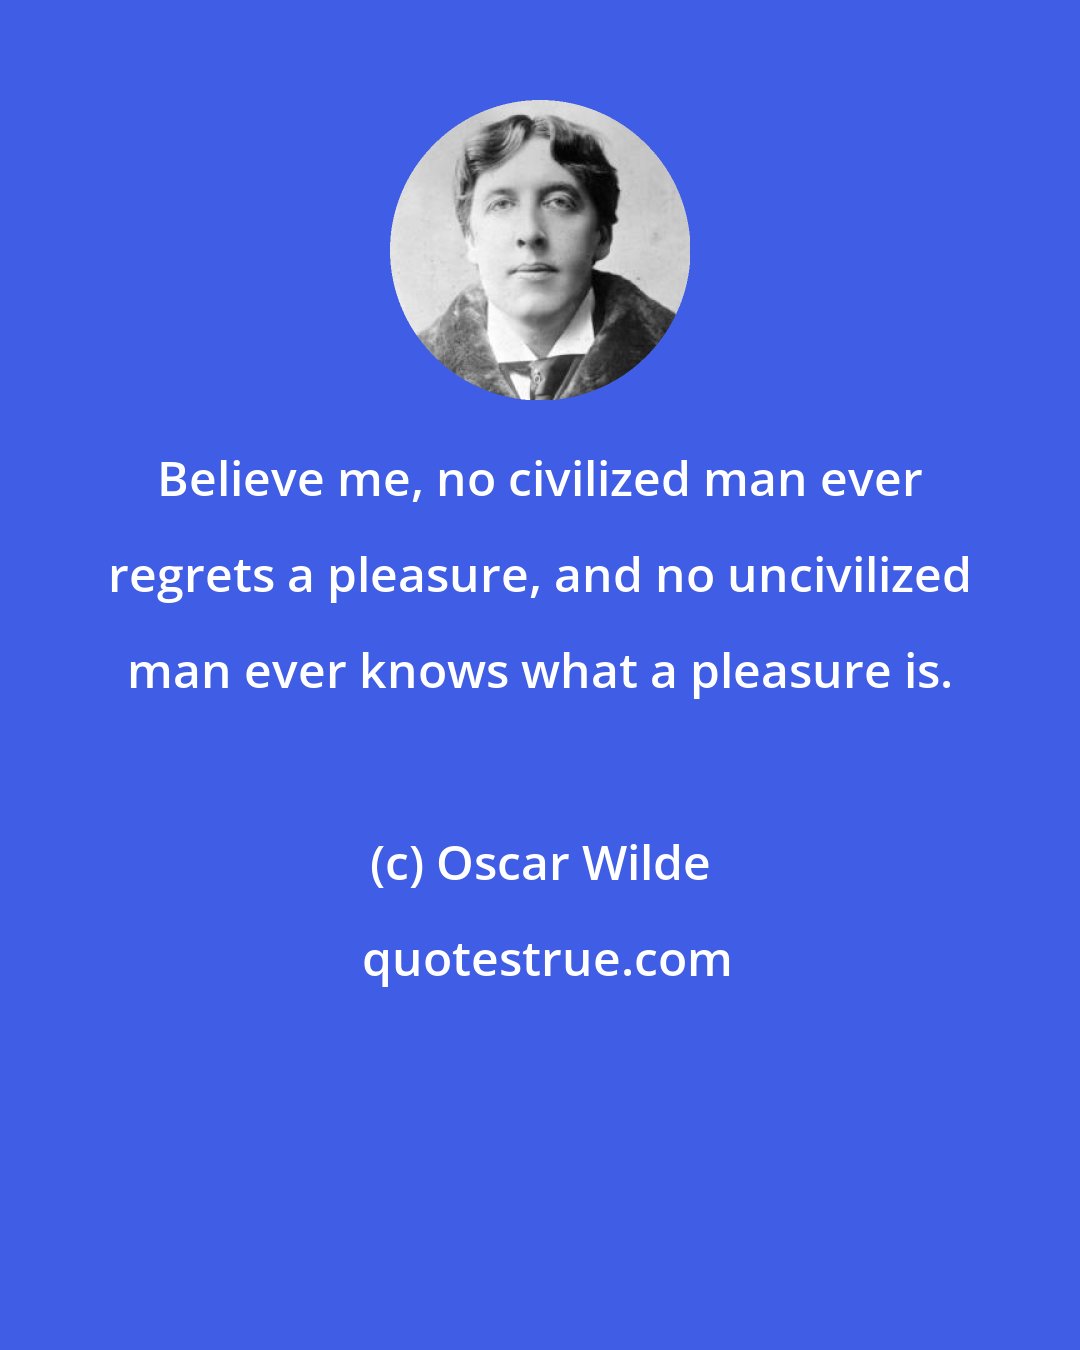 Oscar Wilde: Believe me, no civilized man ever regrets a pleasure, and no uncivilized man ever knows what a pleasure is.